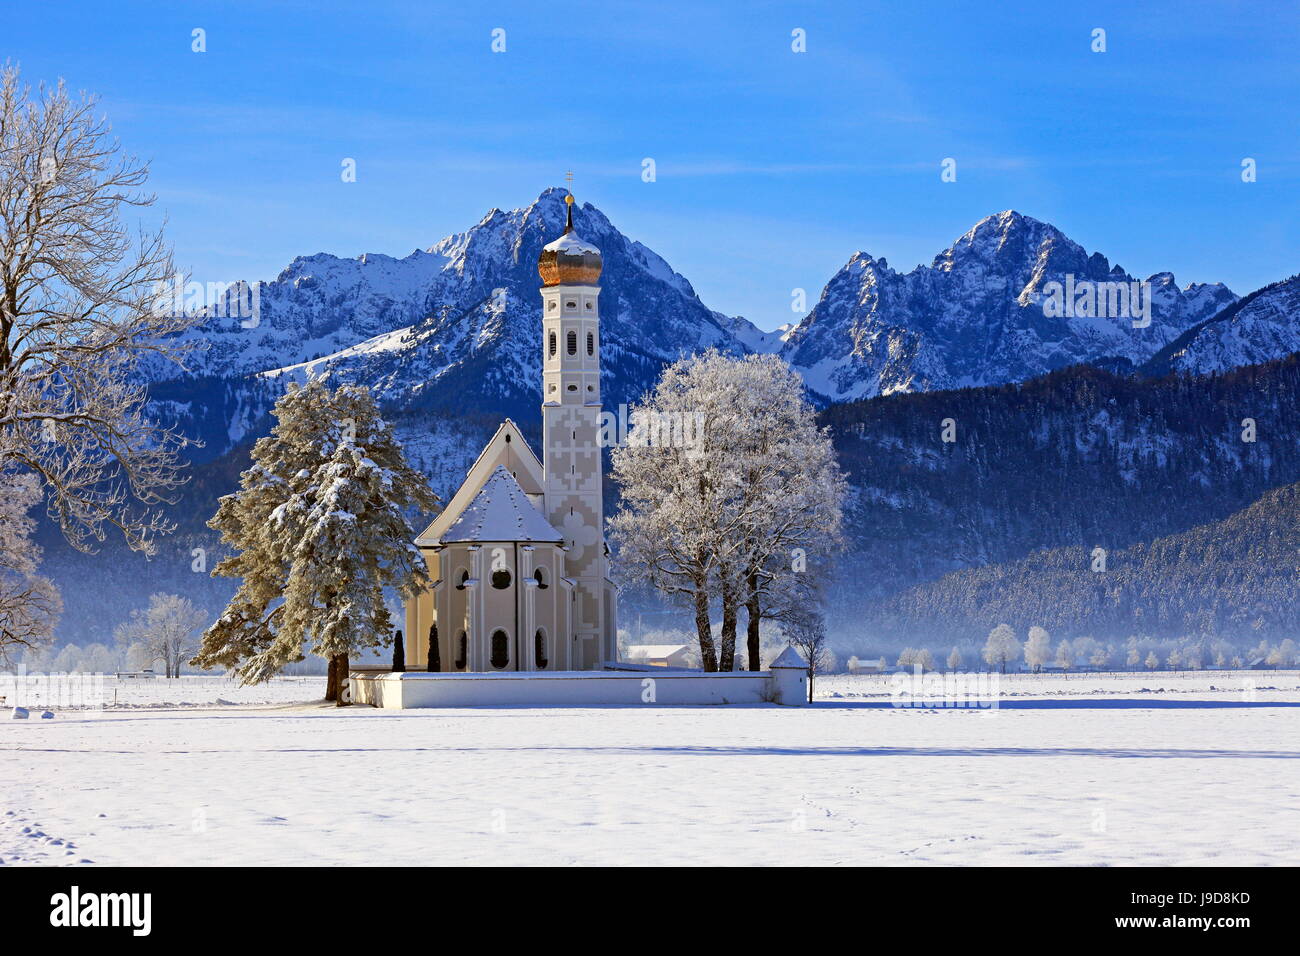 Church of St. Coloman and Tannheimer Alps near Schwangau, Allgau, Bavaria, Germany, Europe Stock Photo